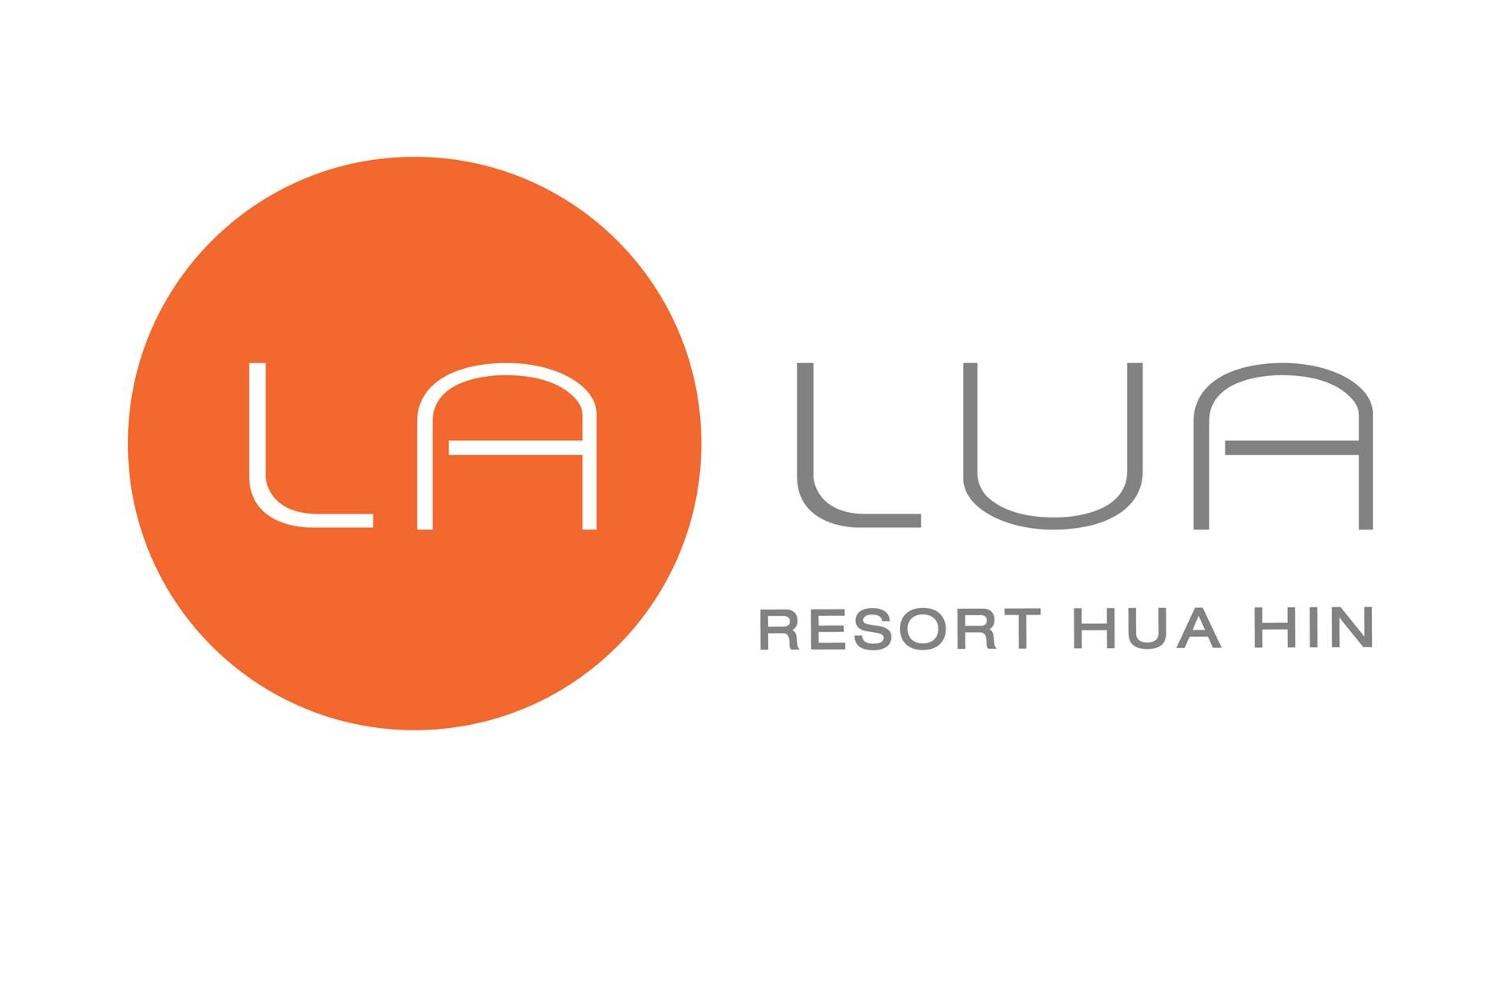 La Lua Resort Hua Hin